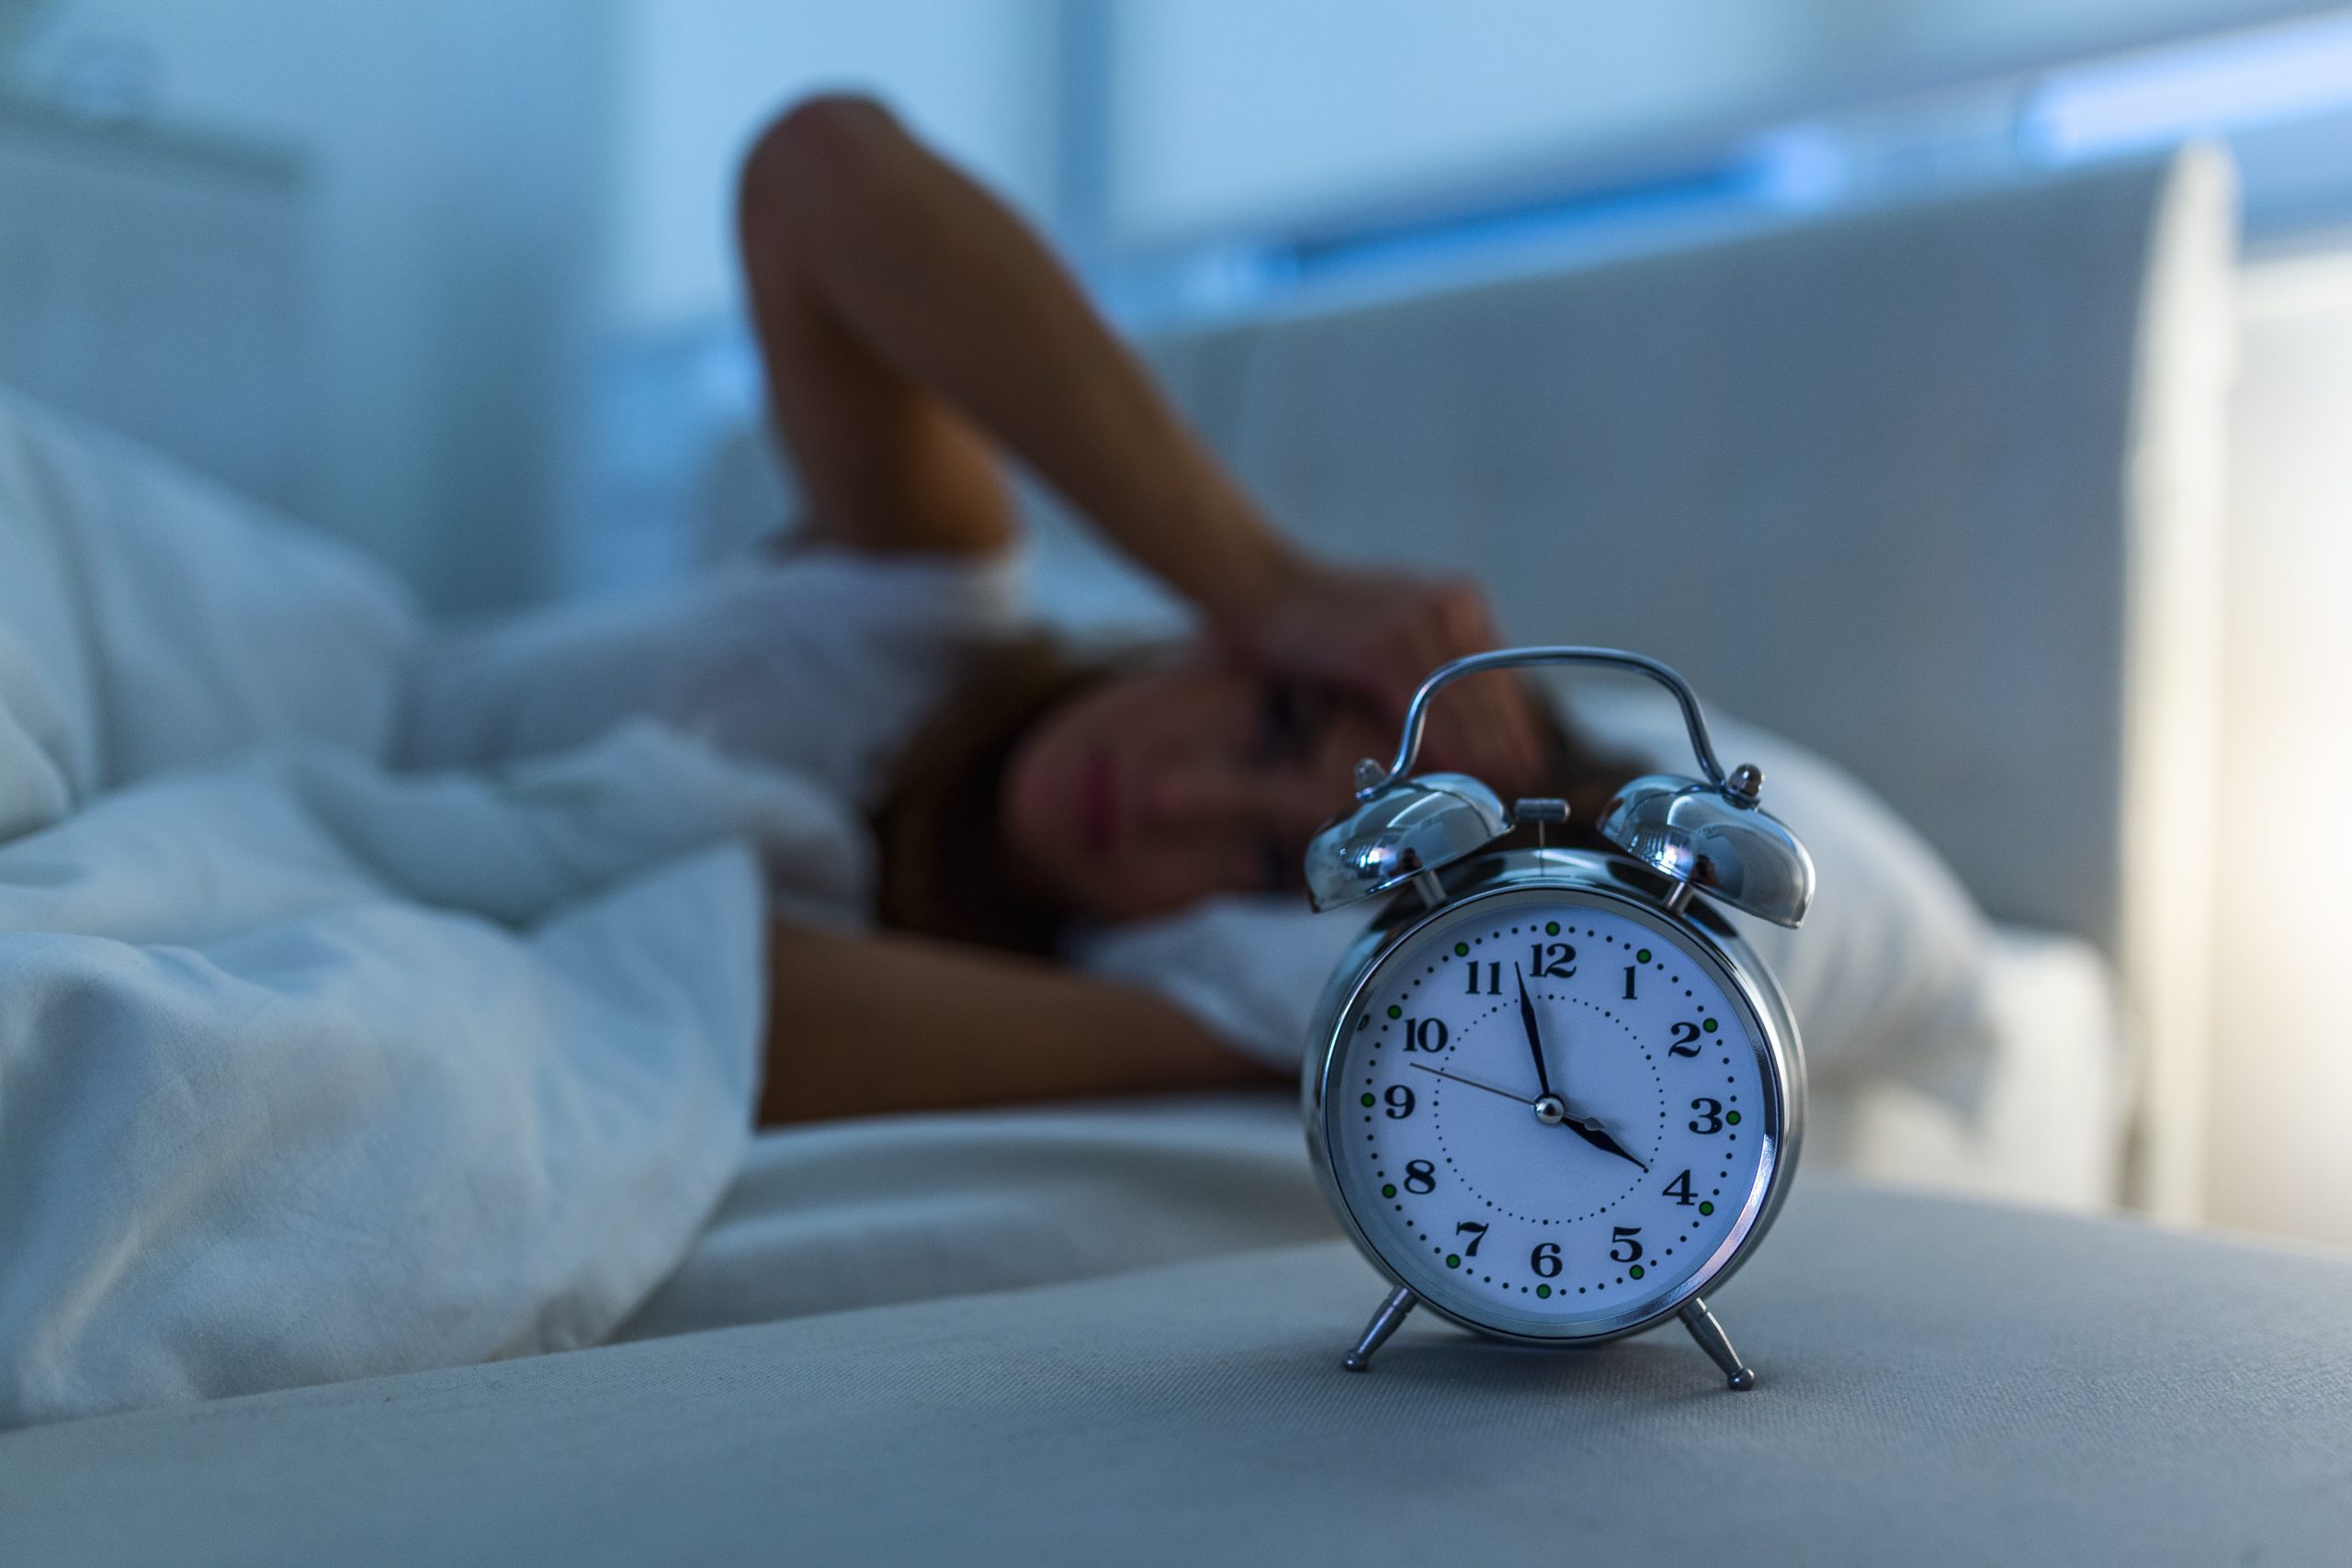 Does ADHD affect sleep?